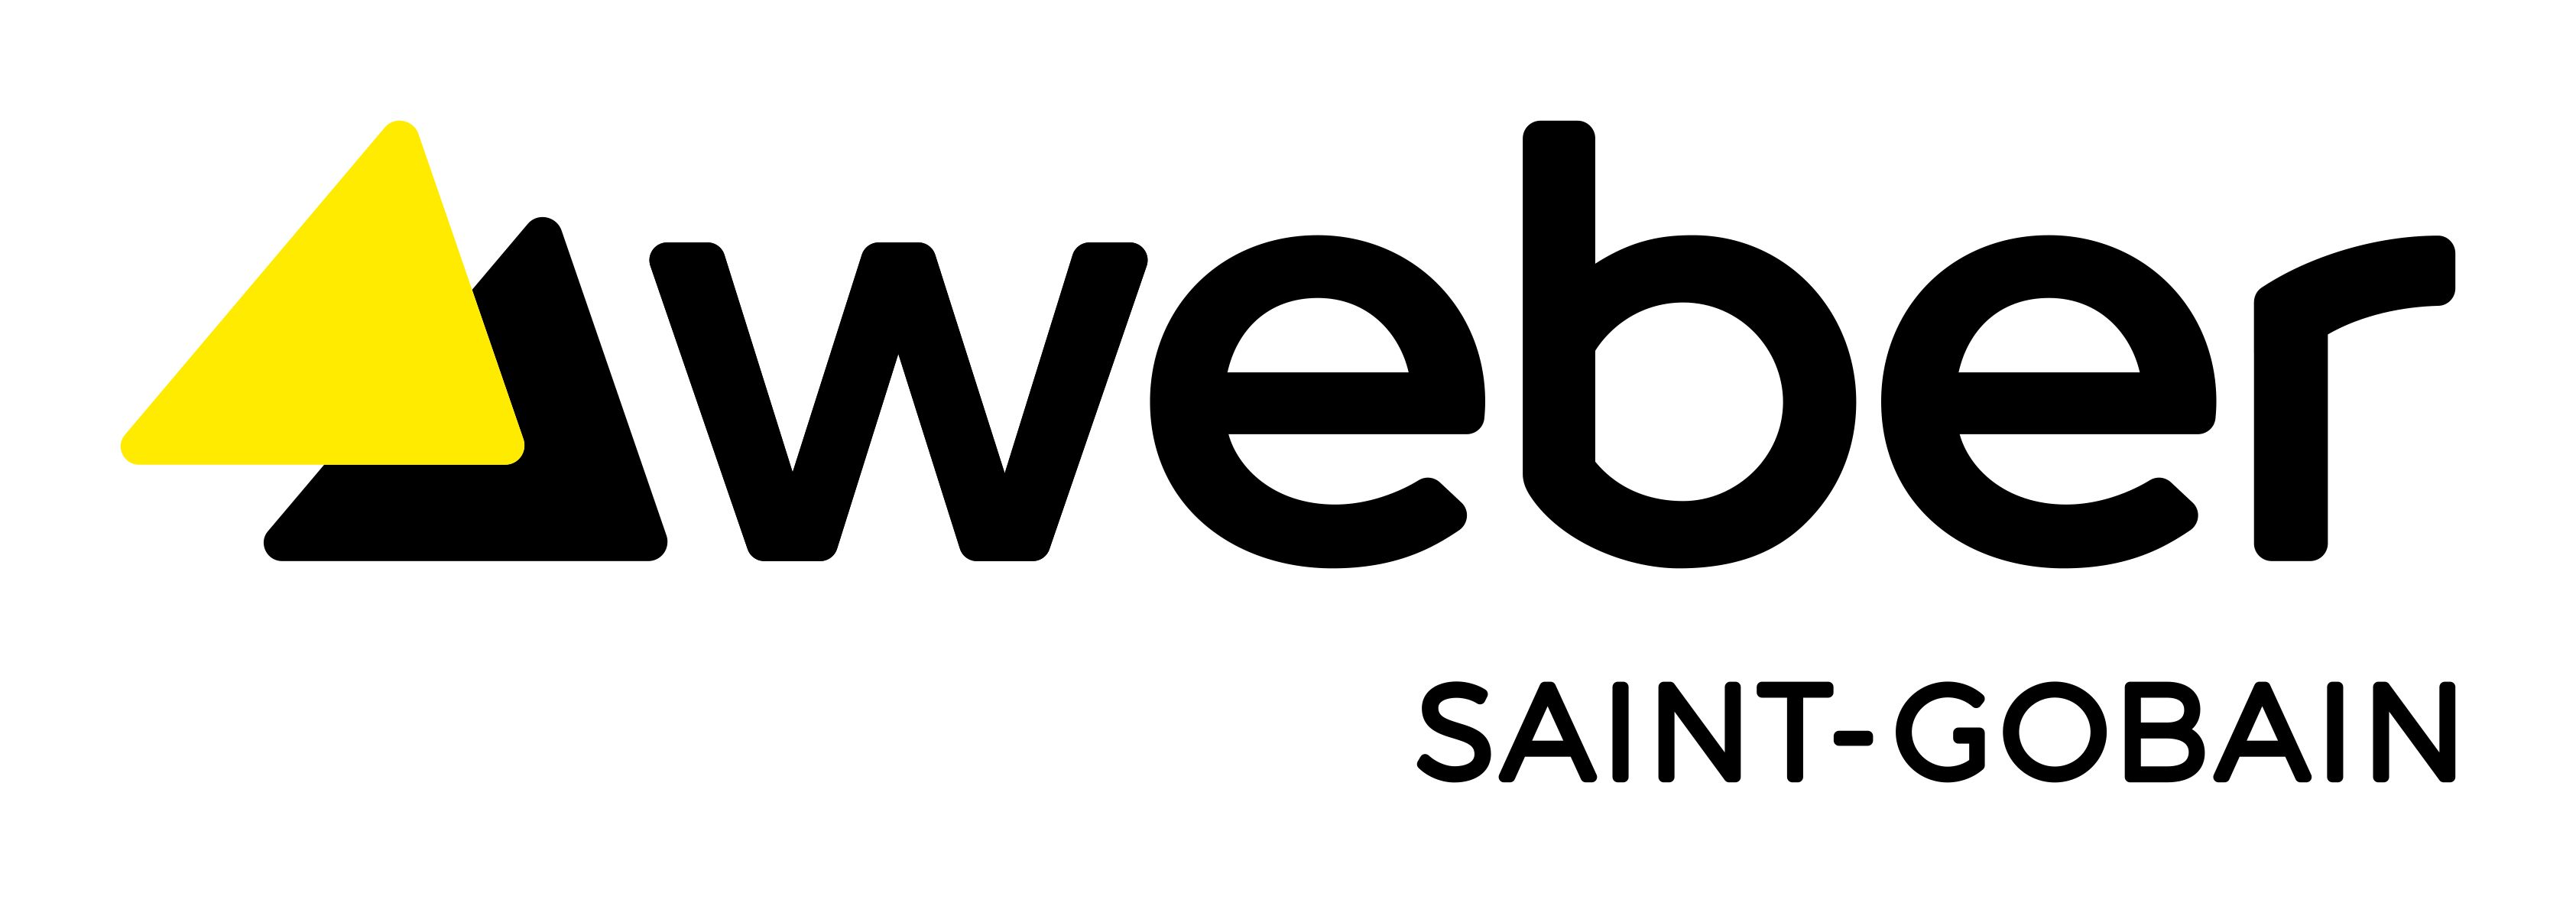 weber-logo-260x73.jpg